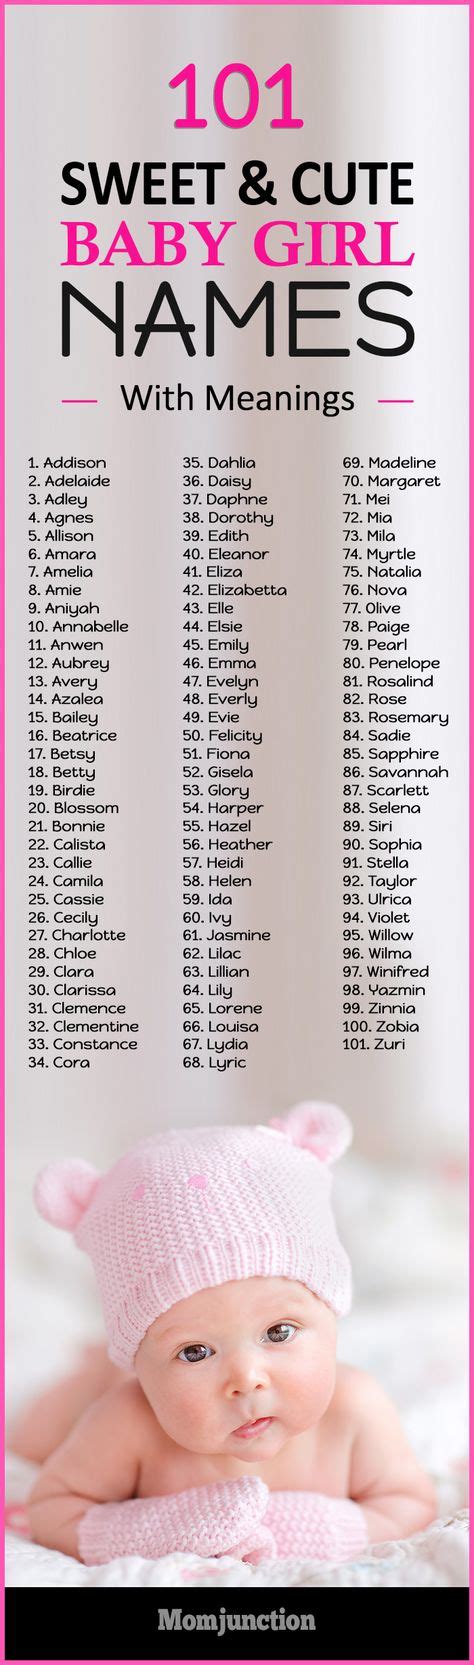 57 Baby Girl Names Ideas In 2021 Baby Girl Names Girl Names Names